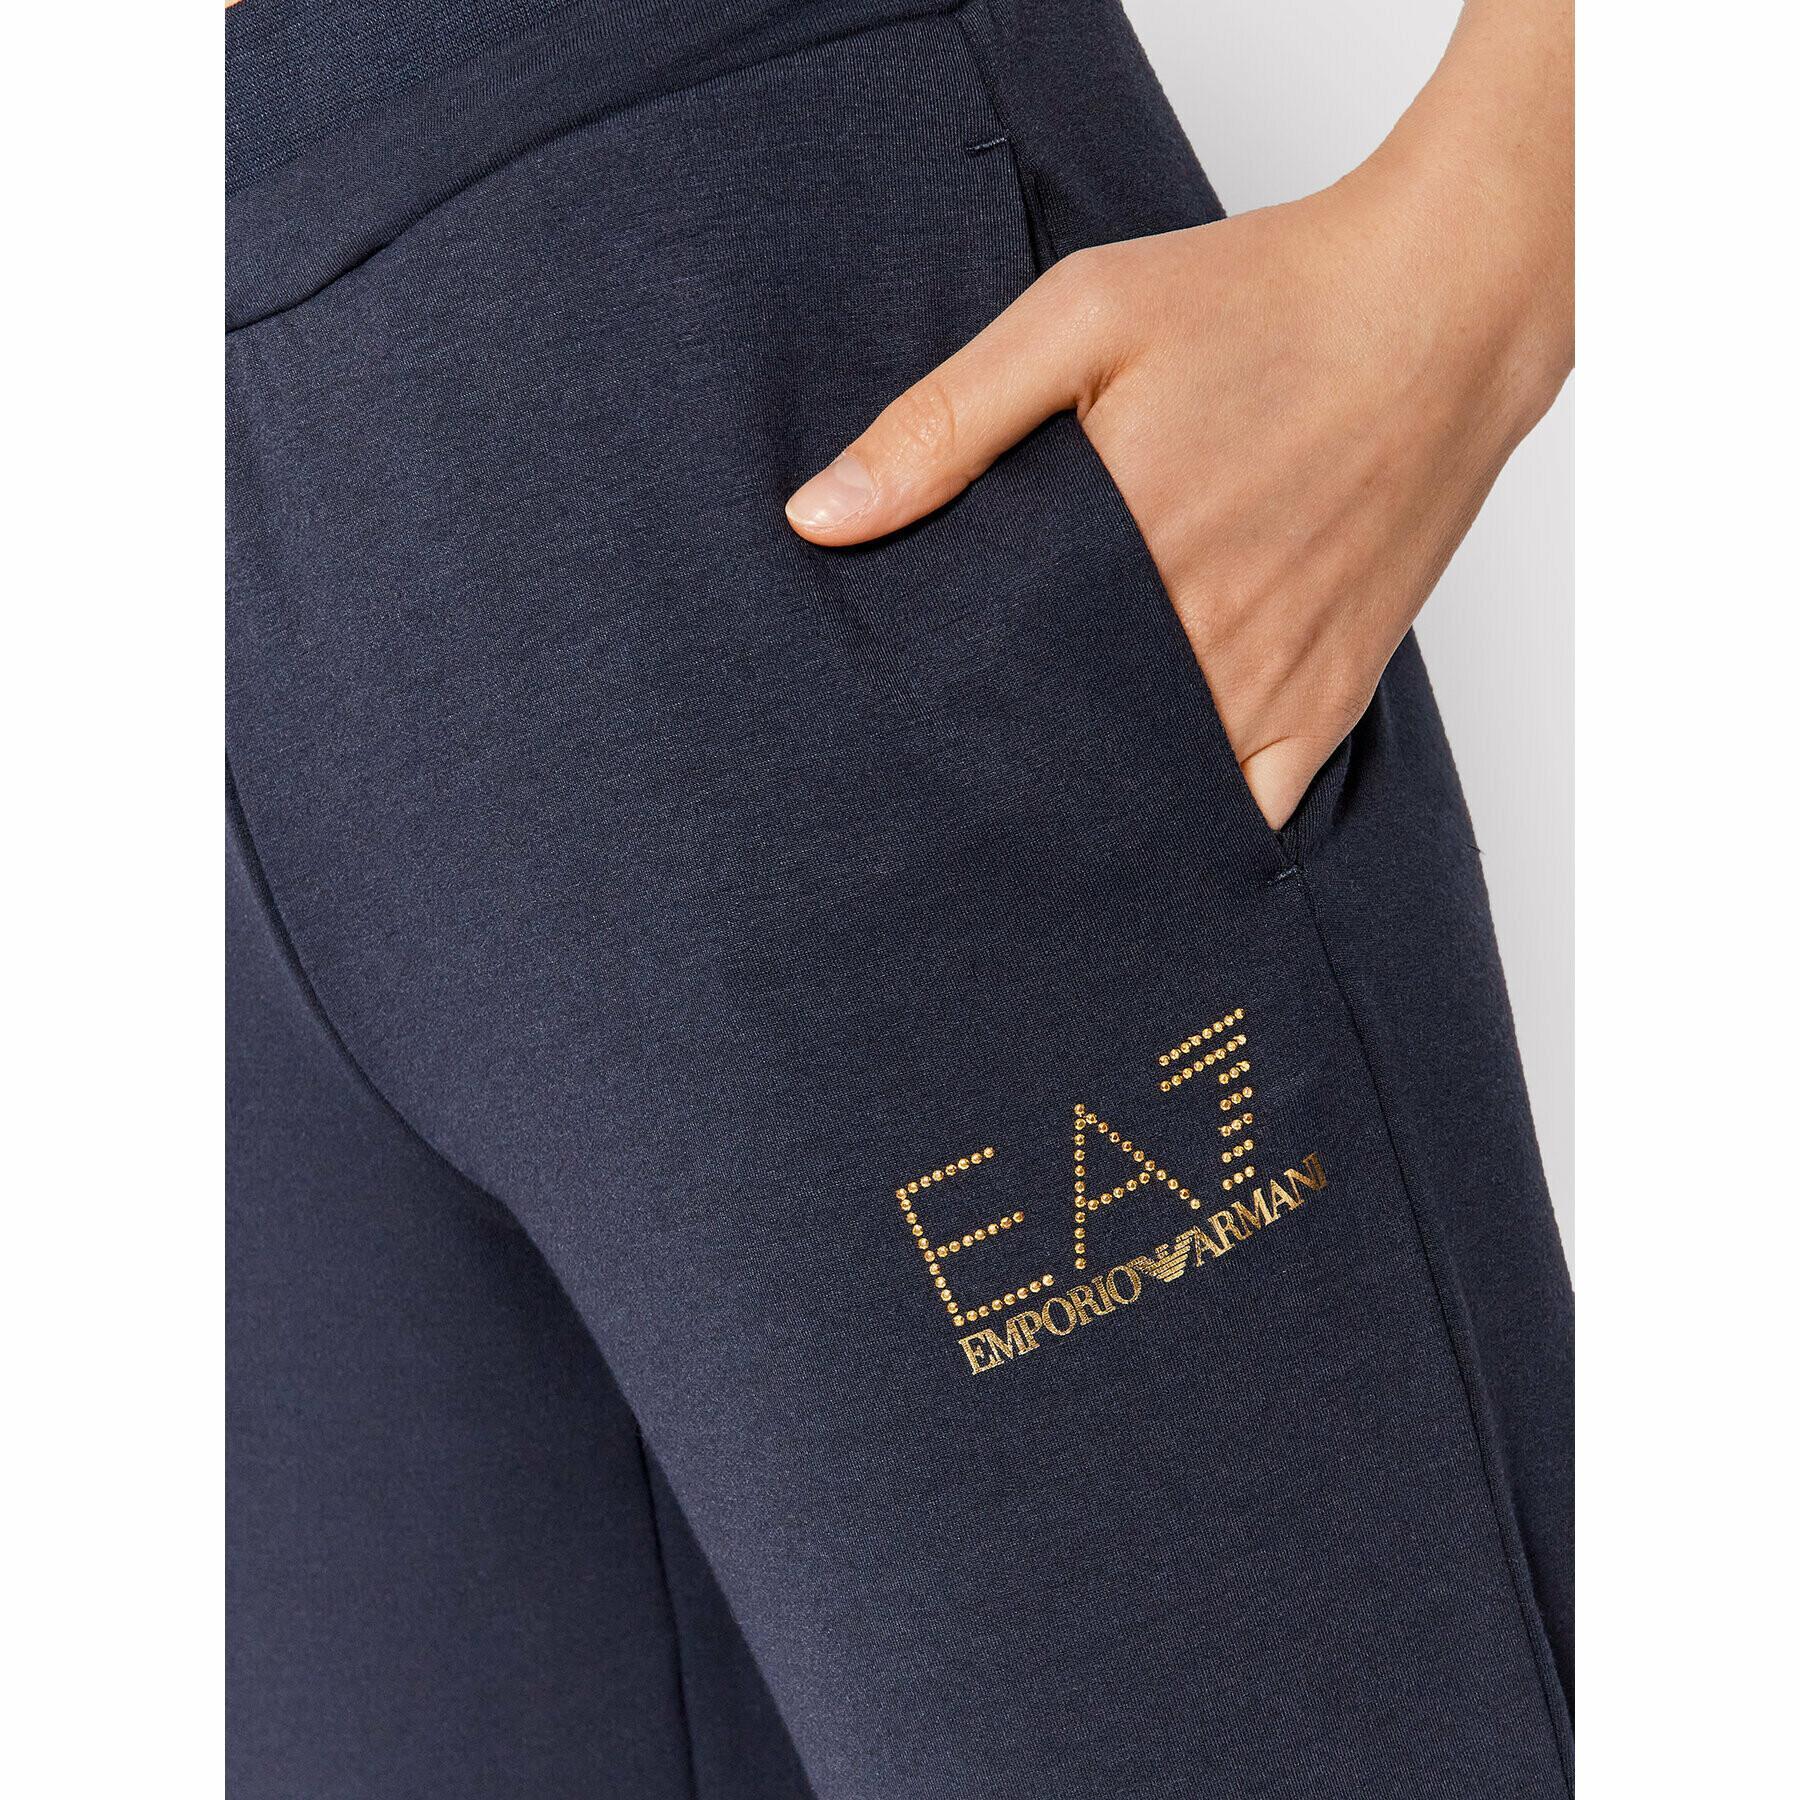 Women's sweat suit EA7 Emporio Armani